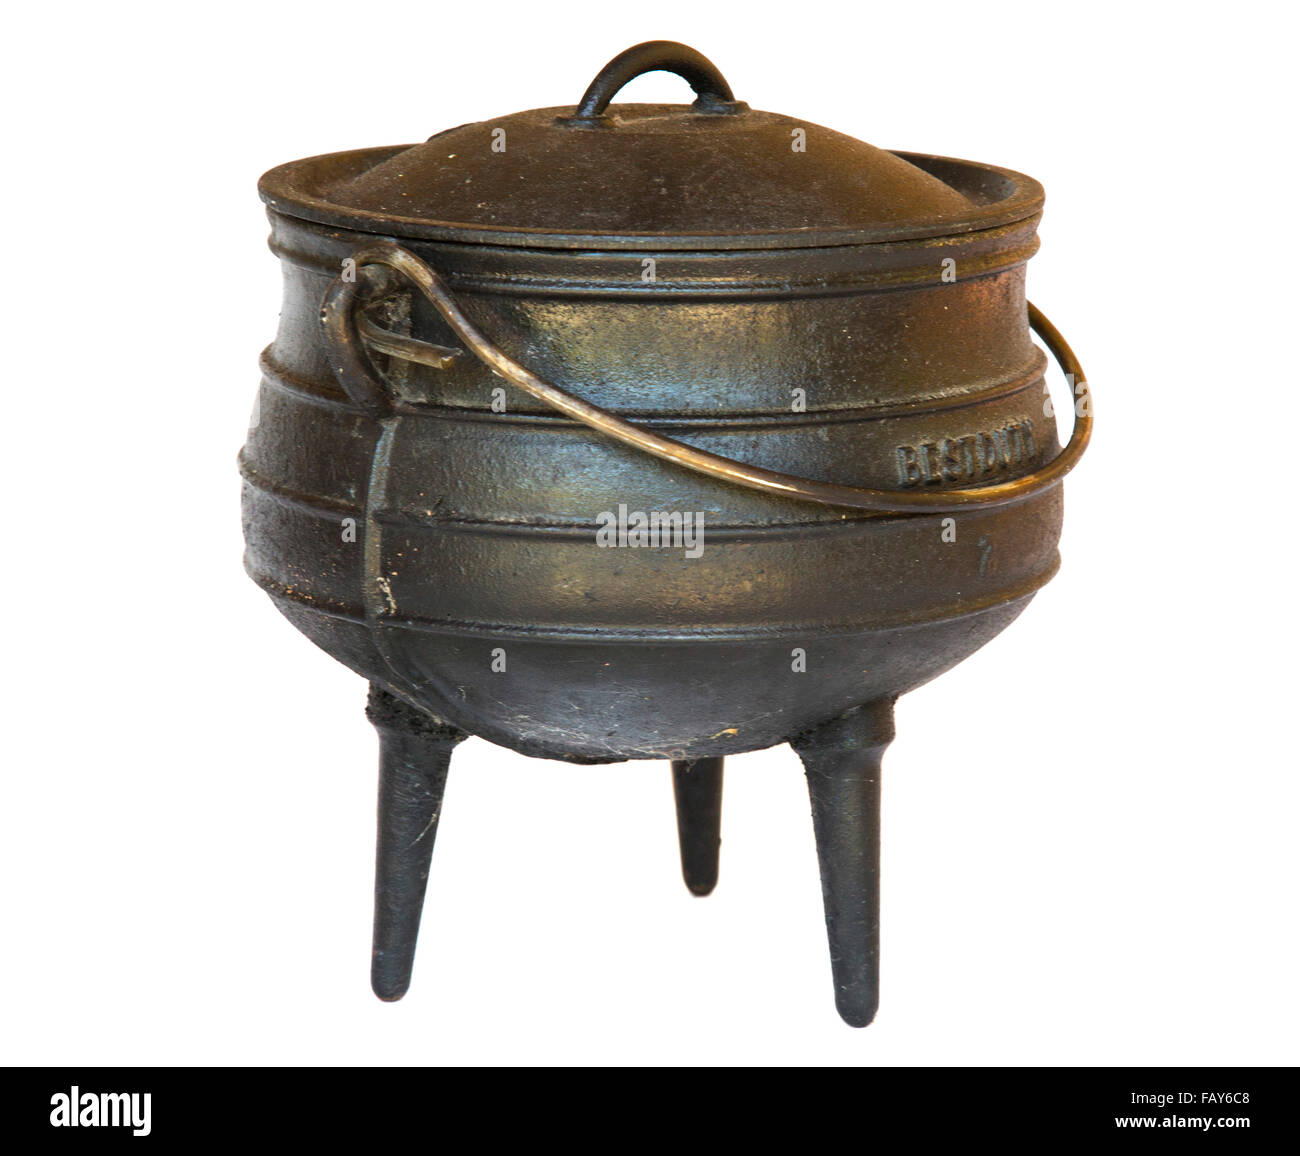 Three-legged black cast iron cooking pot Stock Photo